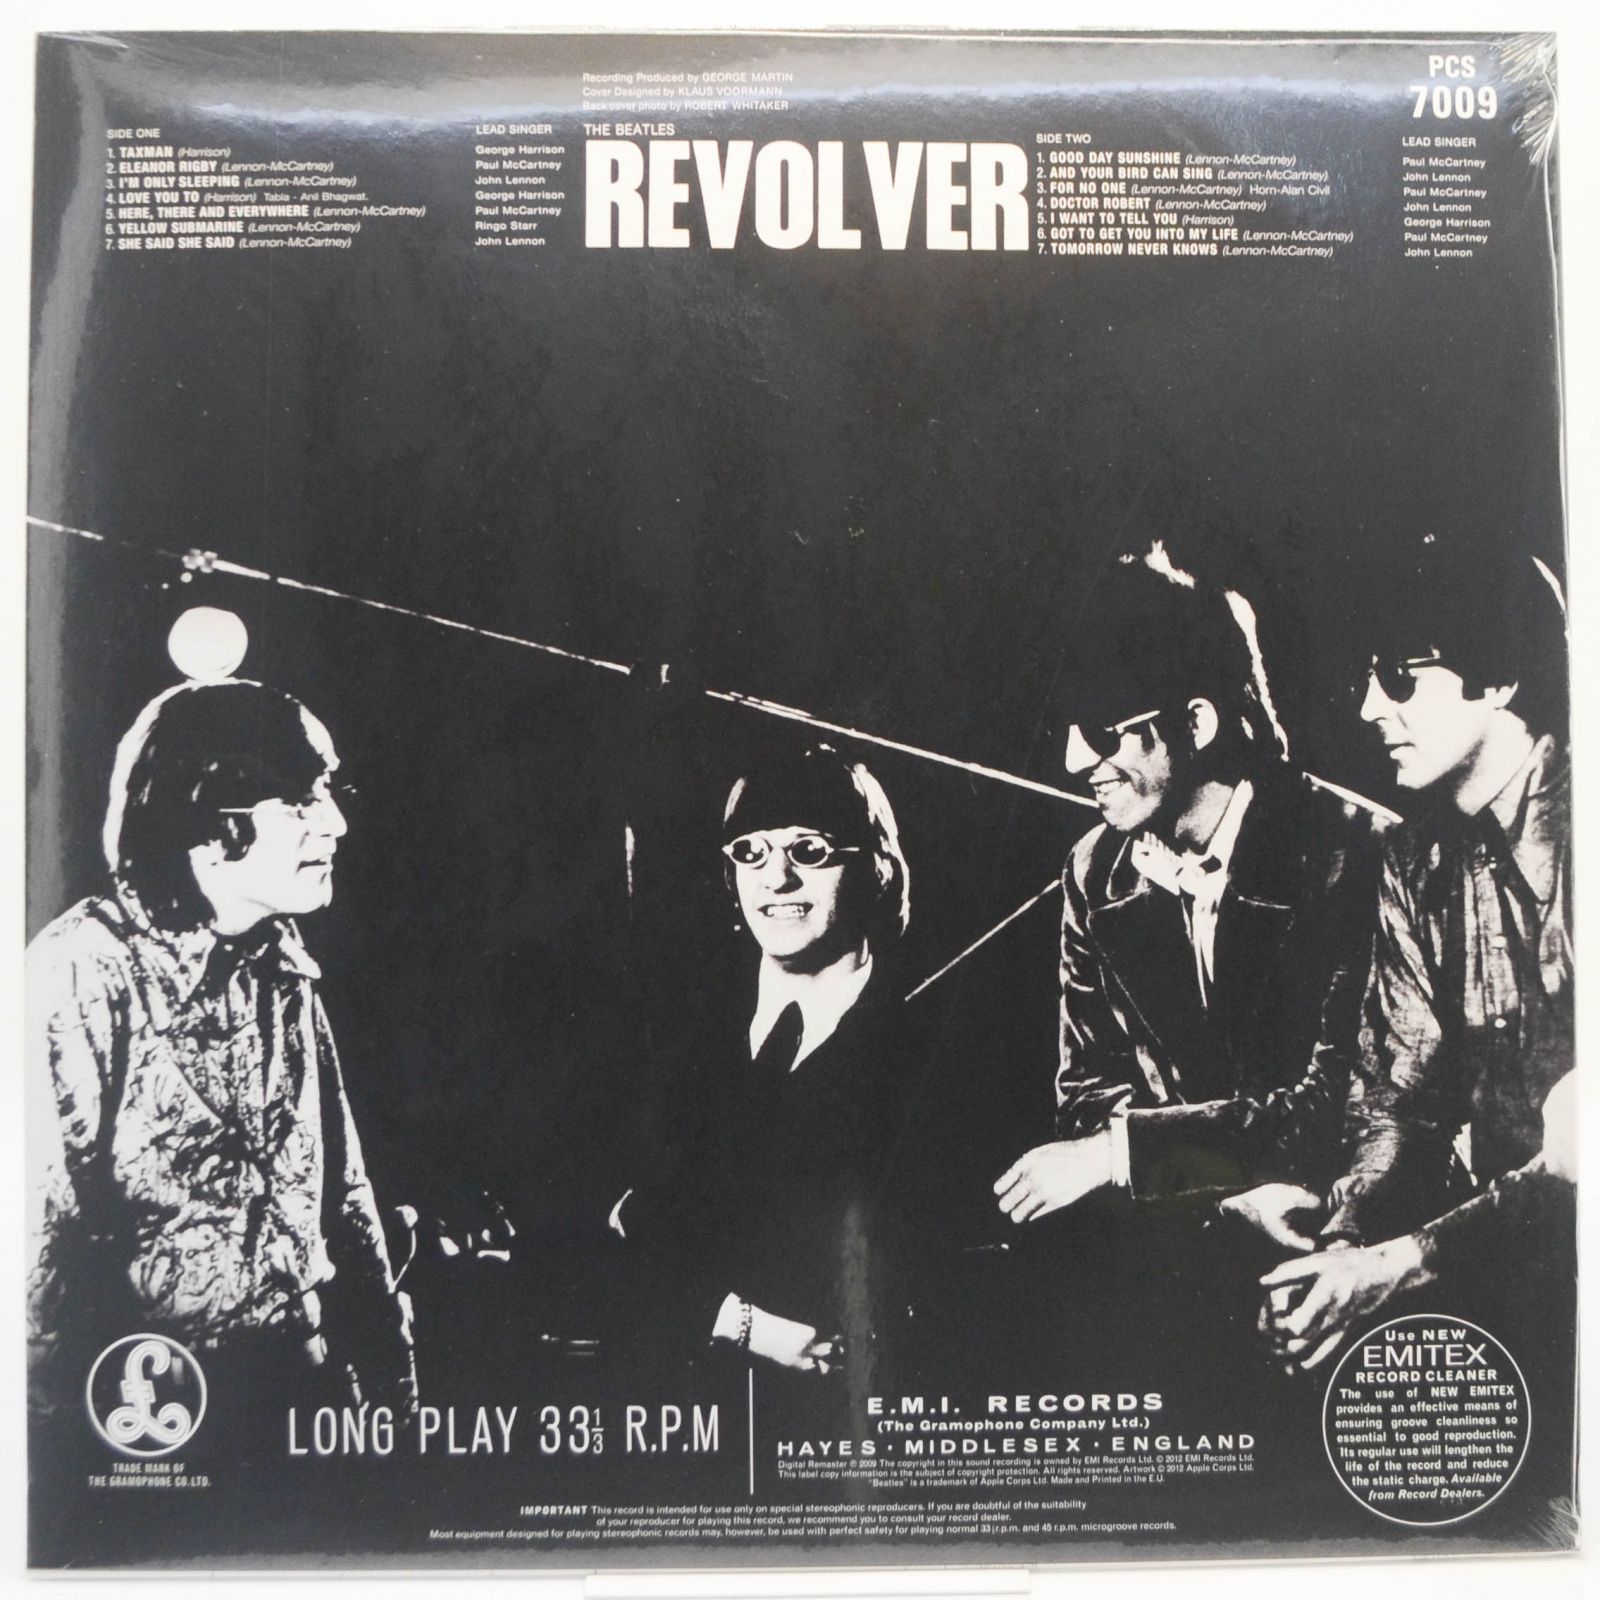 Beatles — Revolver, 2012